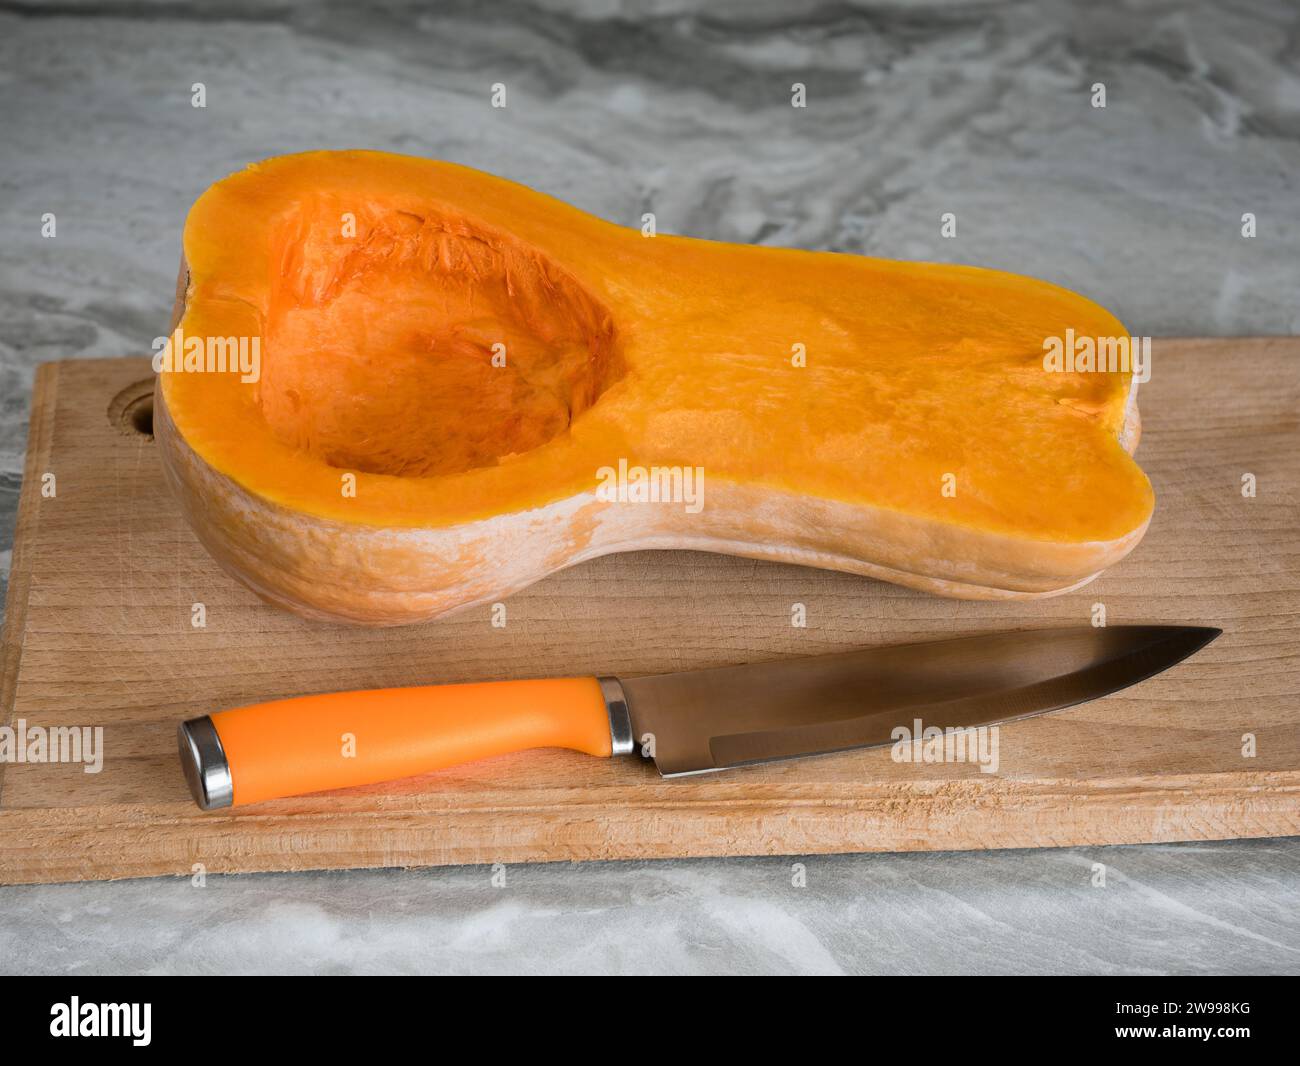 Half a Butternut squash (Cucurbita moschata), known as butternut pumpkin or gramma cut and cleaned on a cutting board with a knife Stock Photo